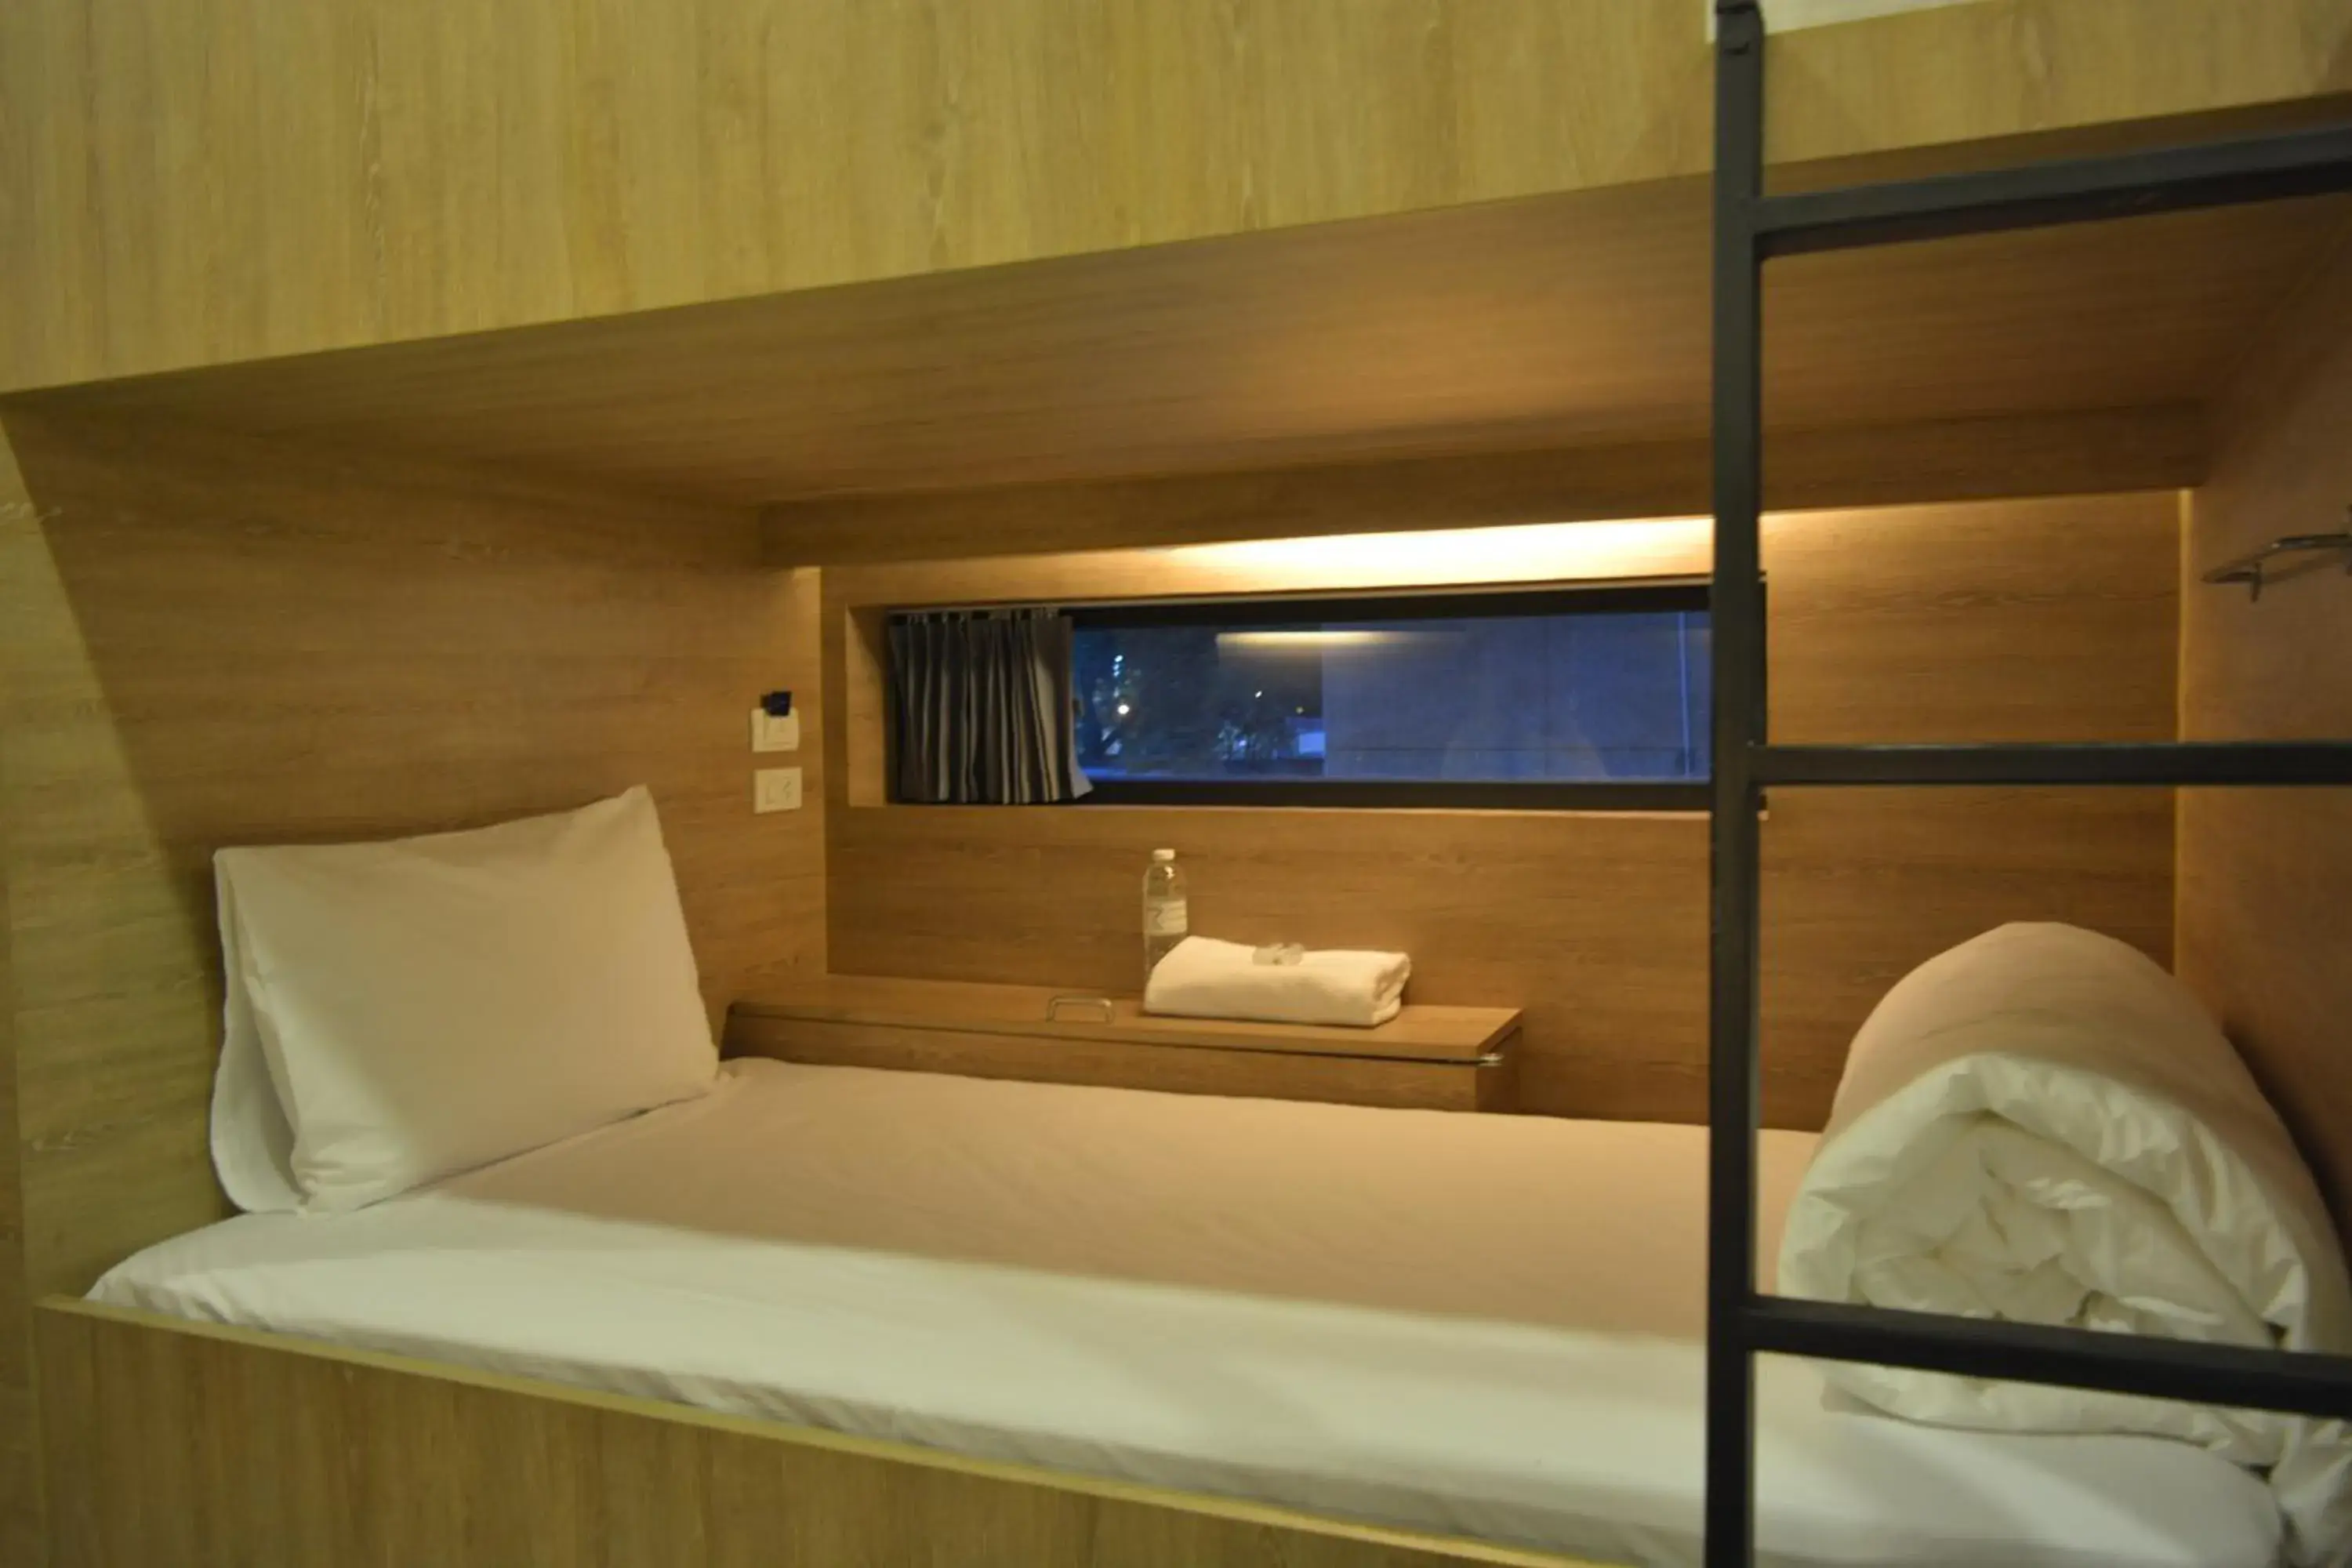 bunk bed, Room Photo in Rezt Bangkok